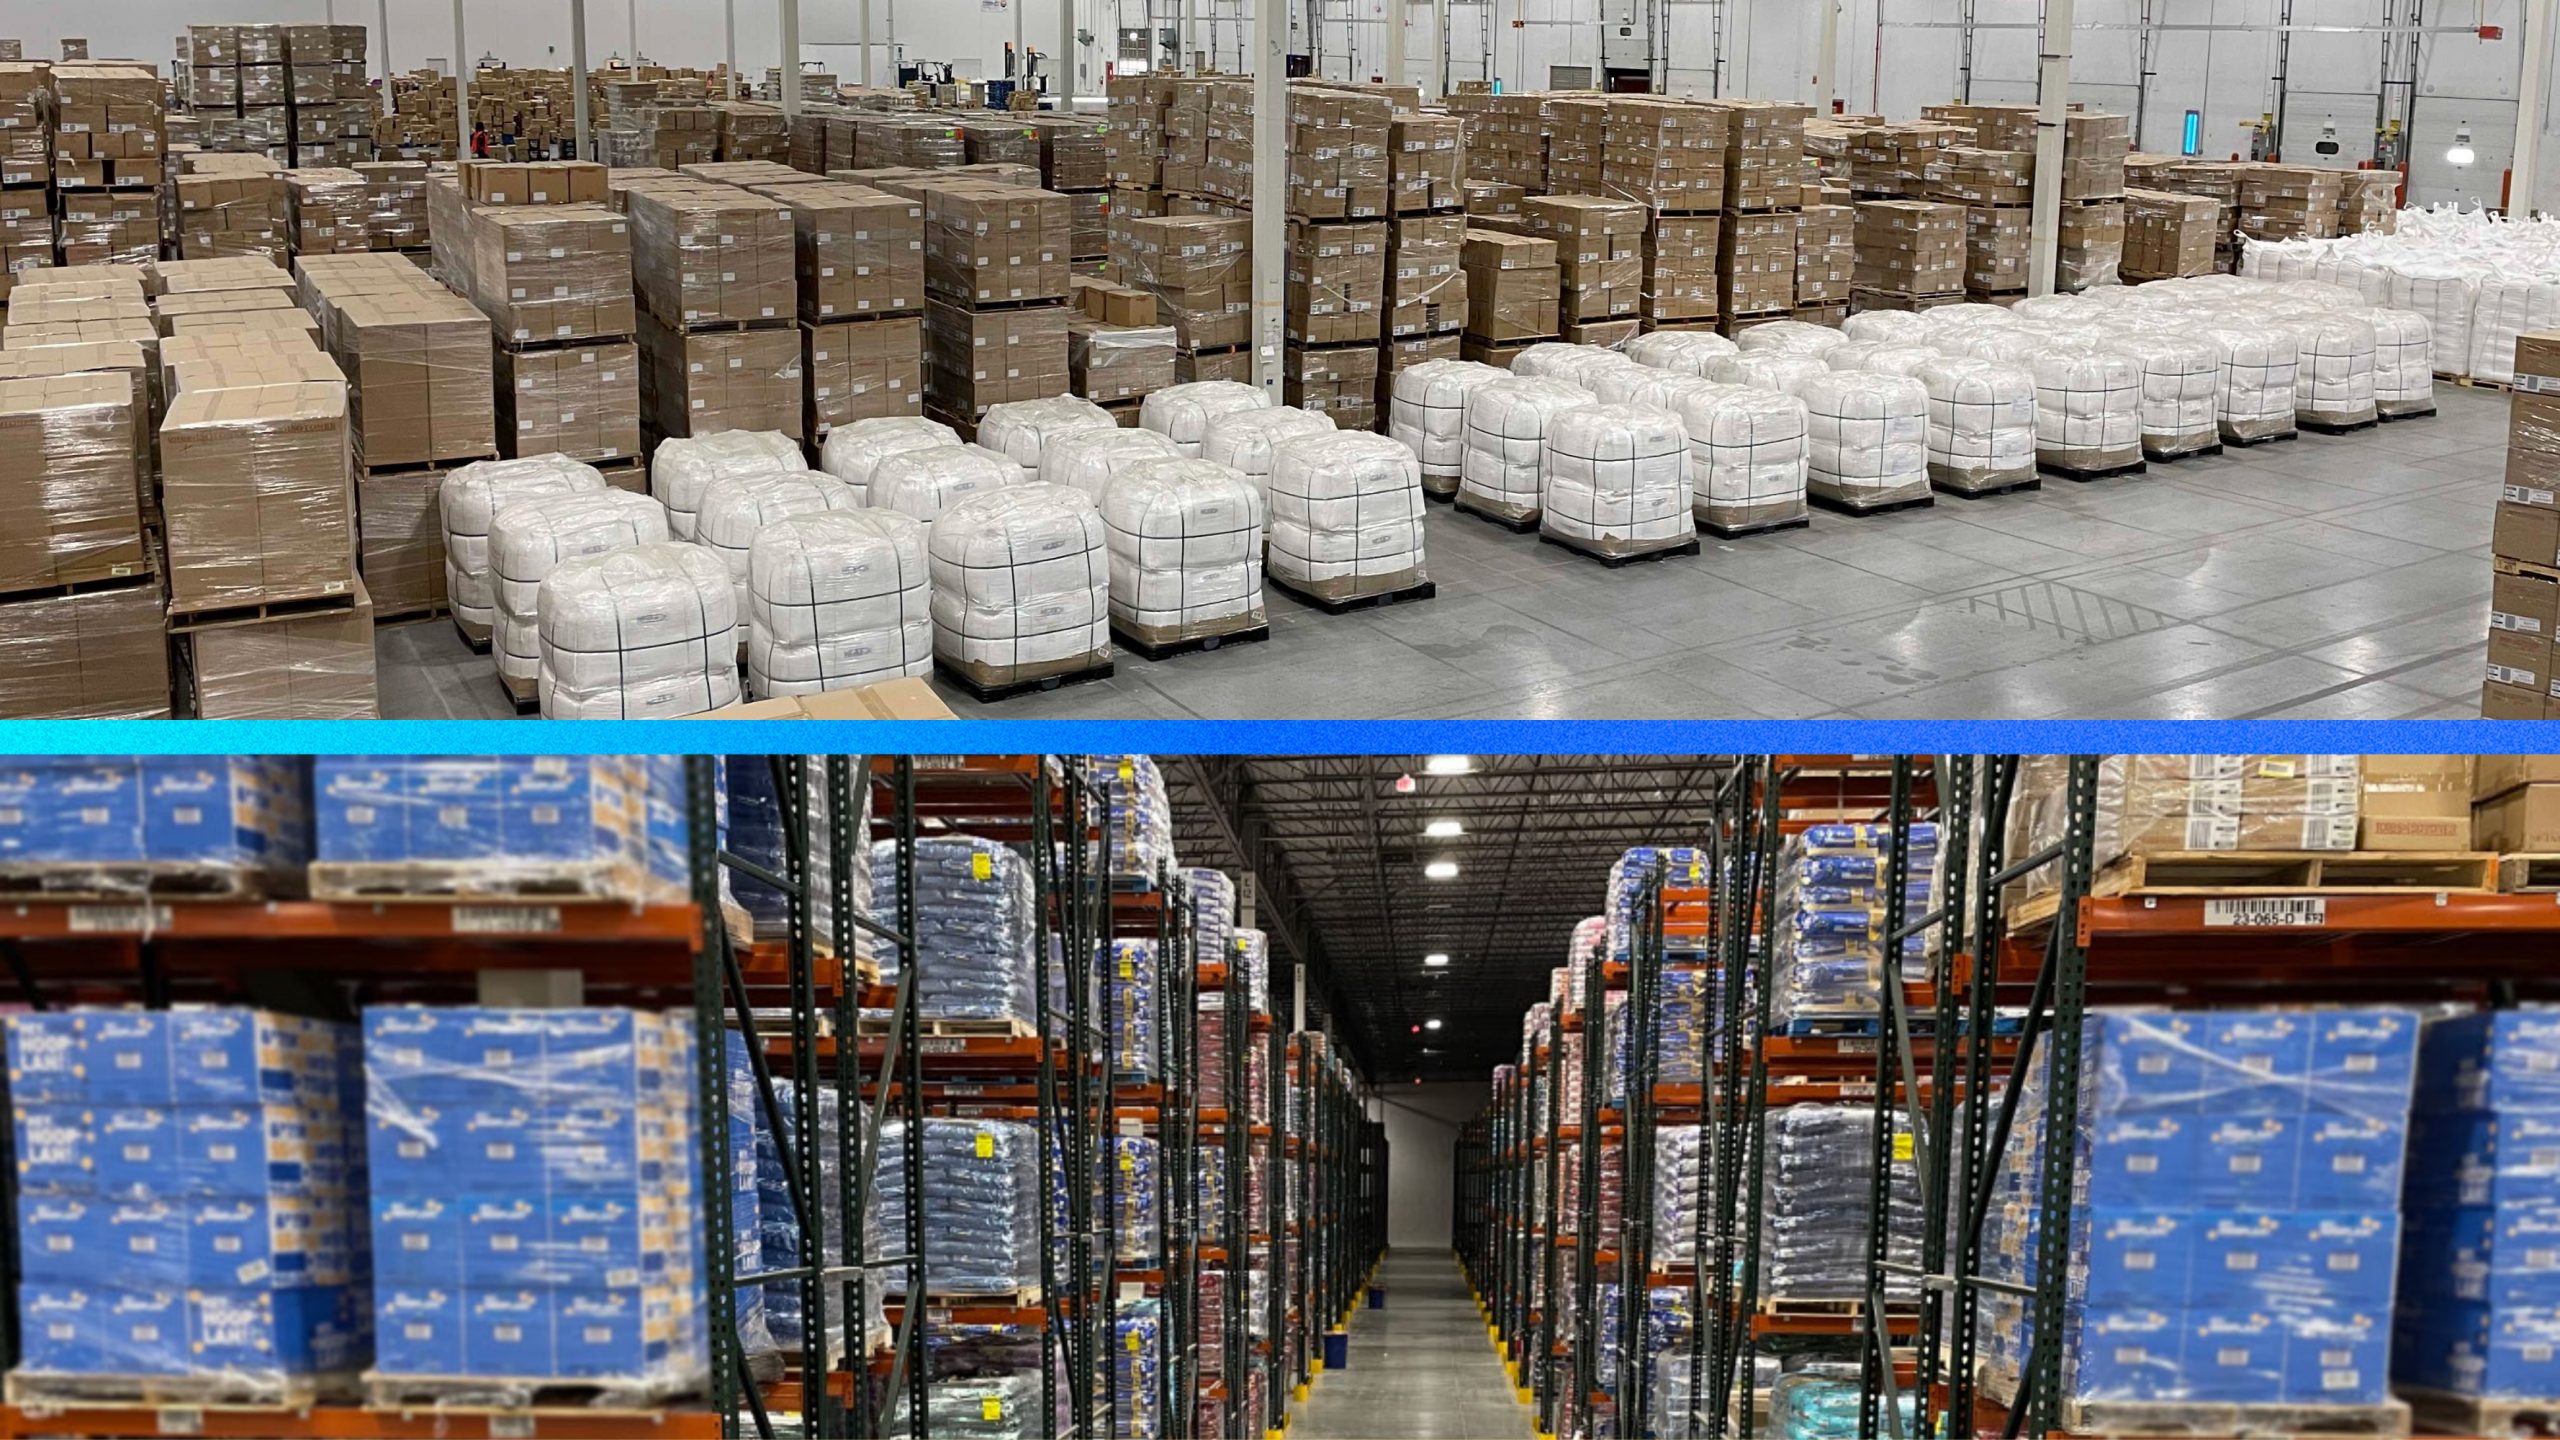 Food Storage and Distribution